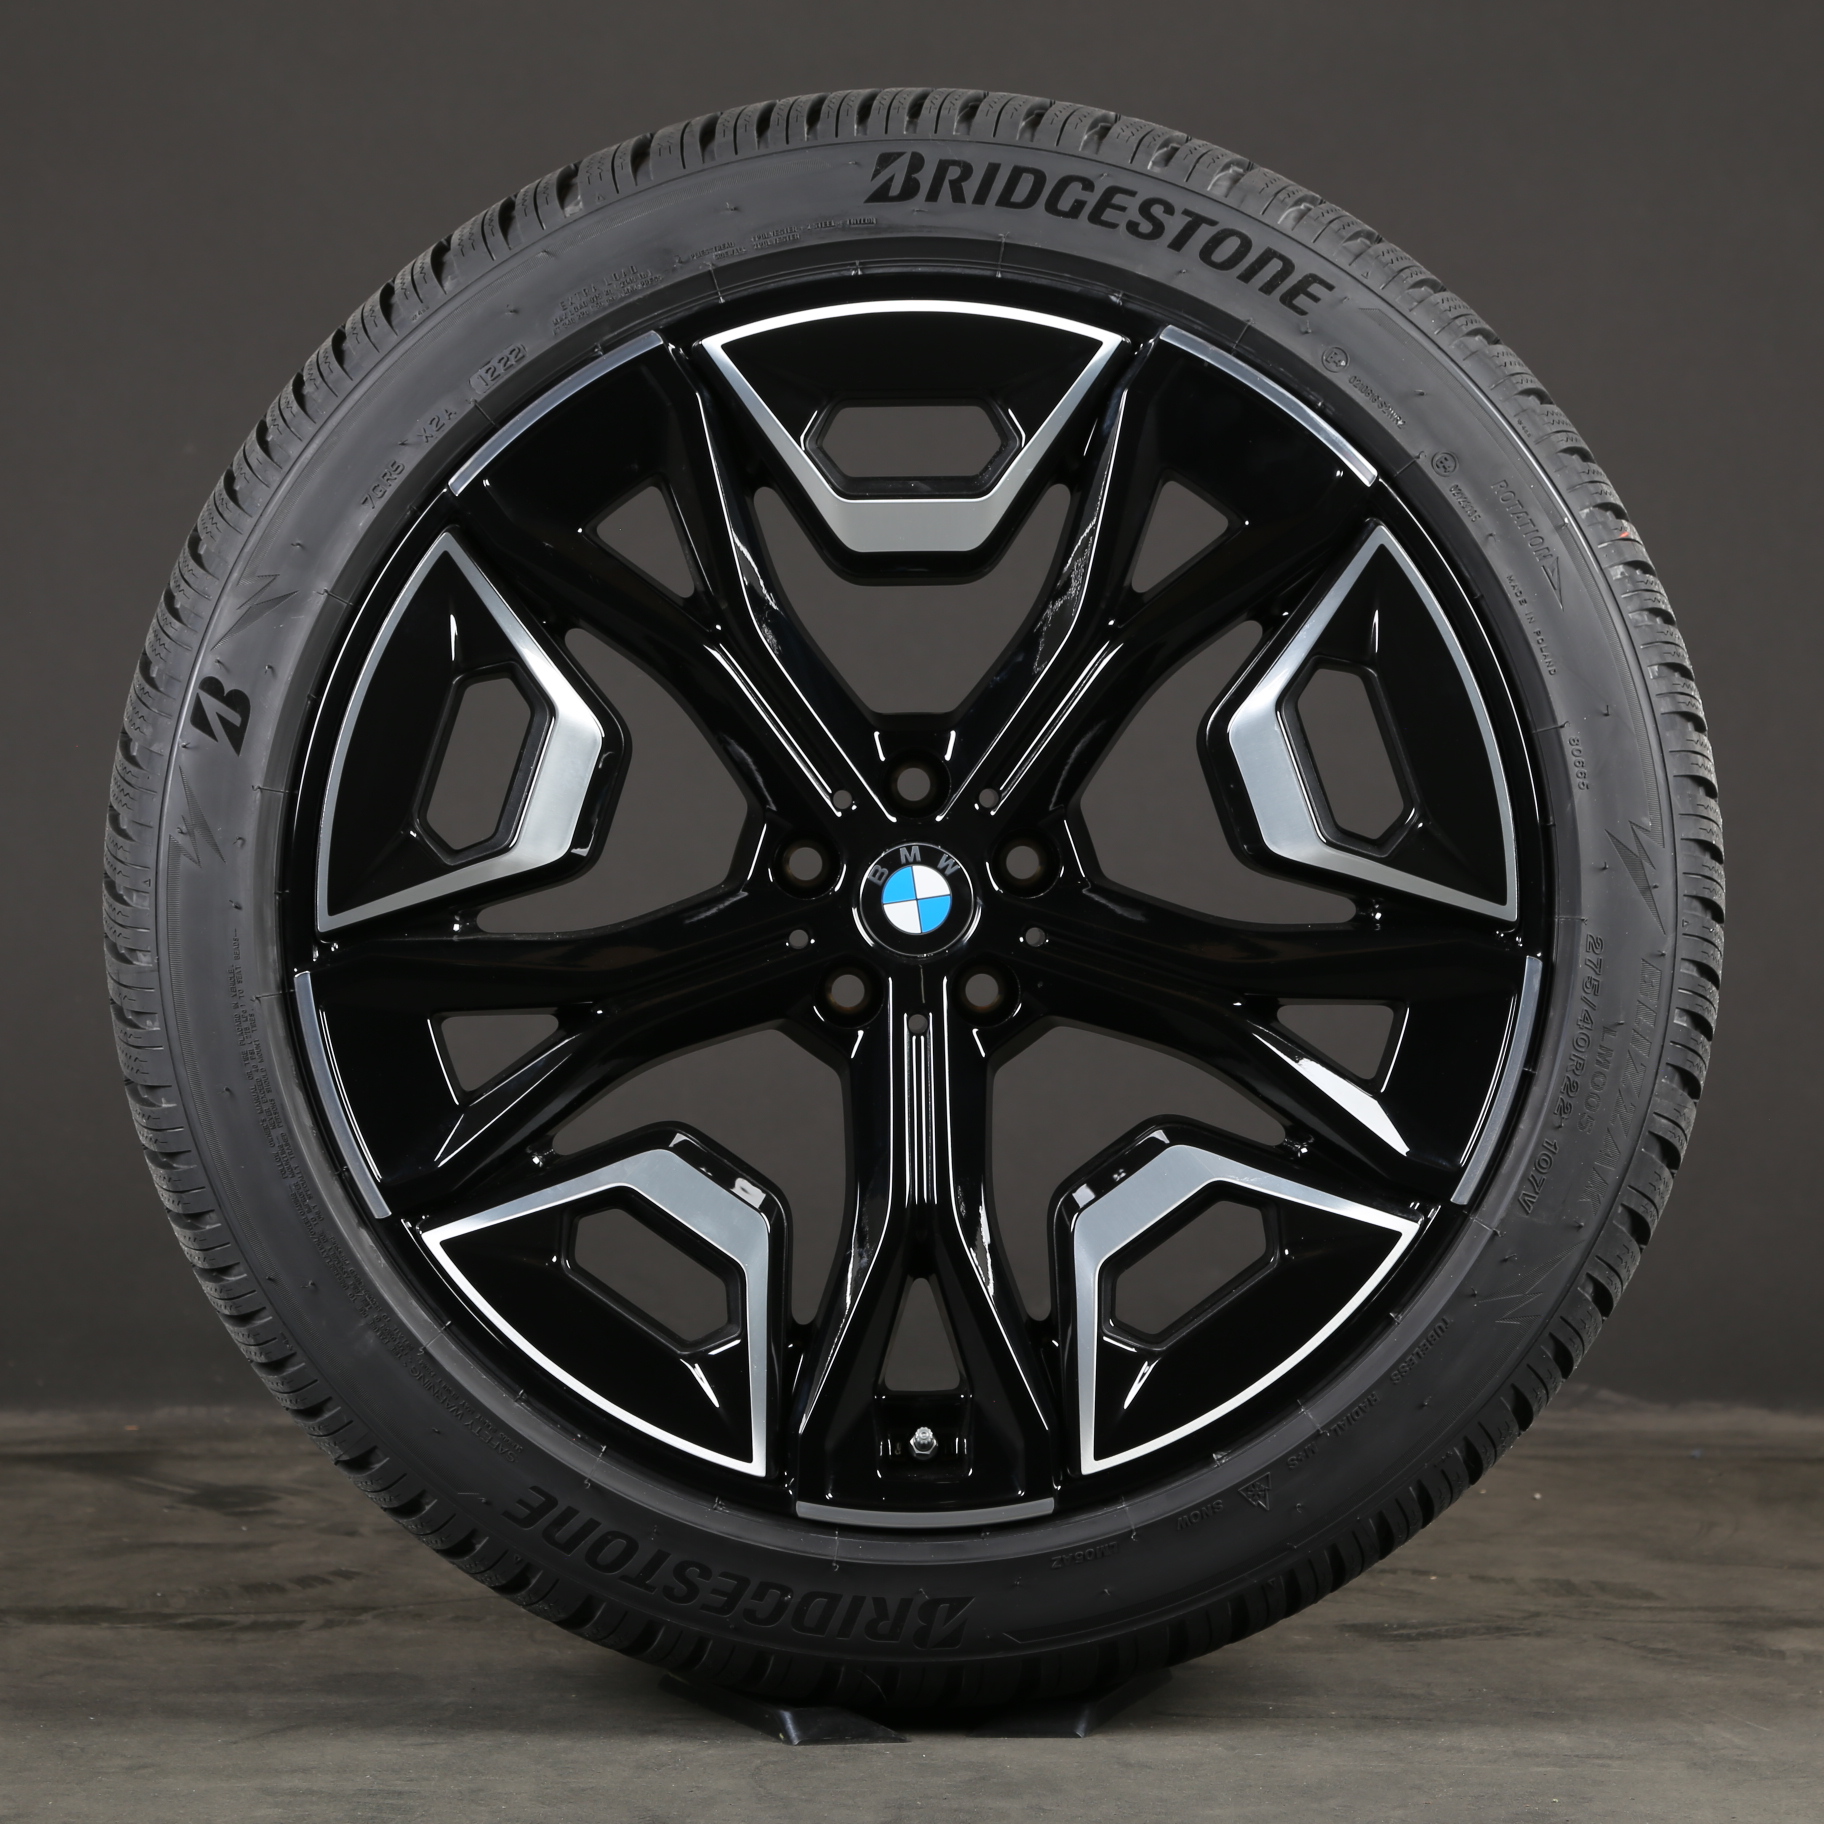 Originale 22-tommer BMW iX vinterhjul i20 aluminiumsfælge Styling 1020 36115A02659